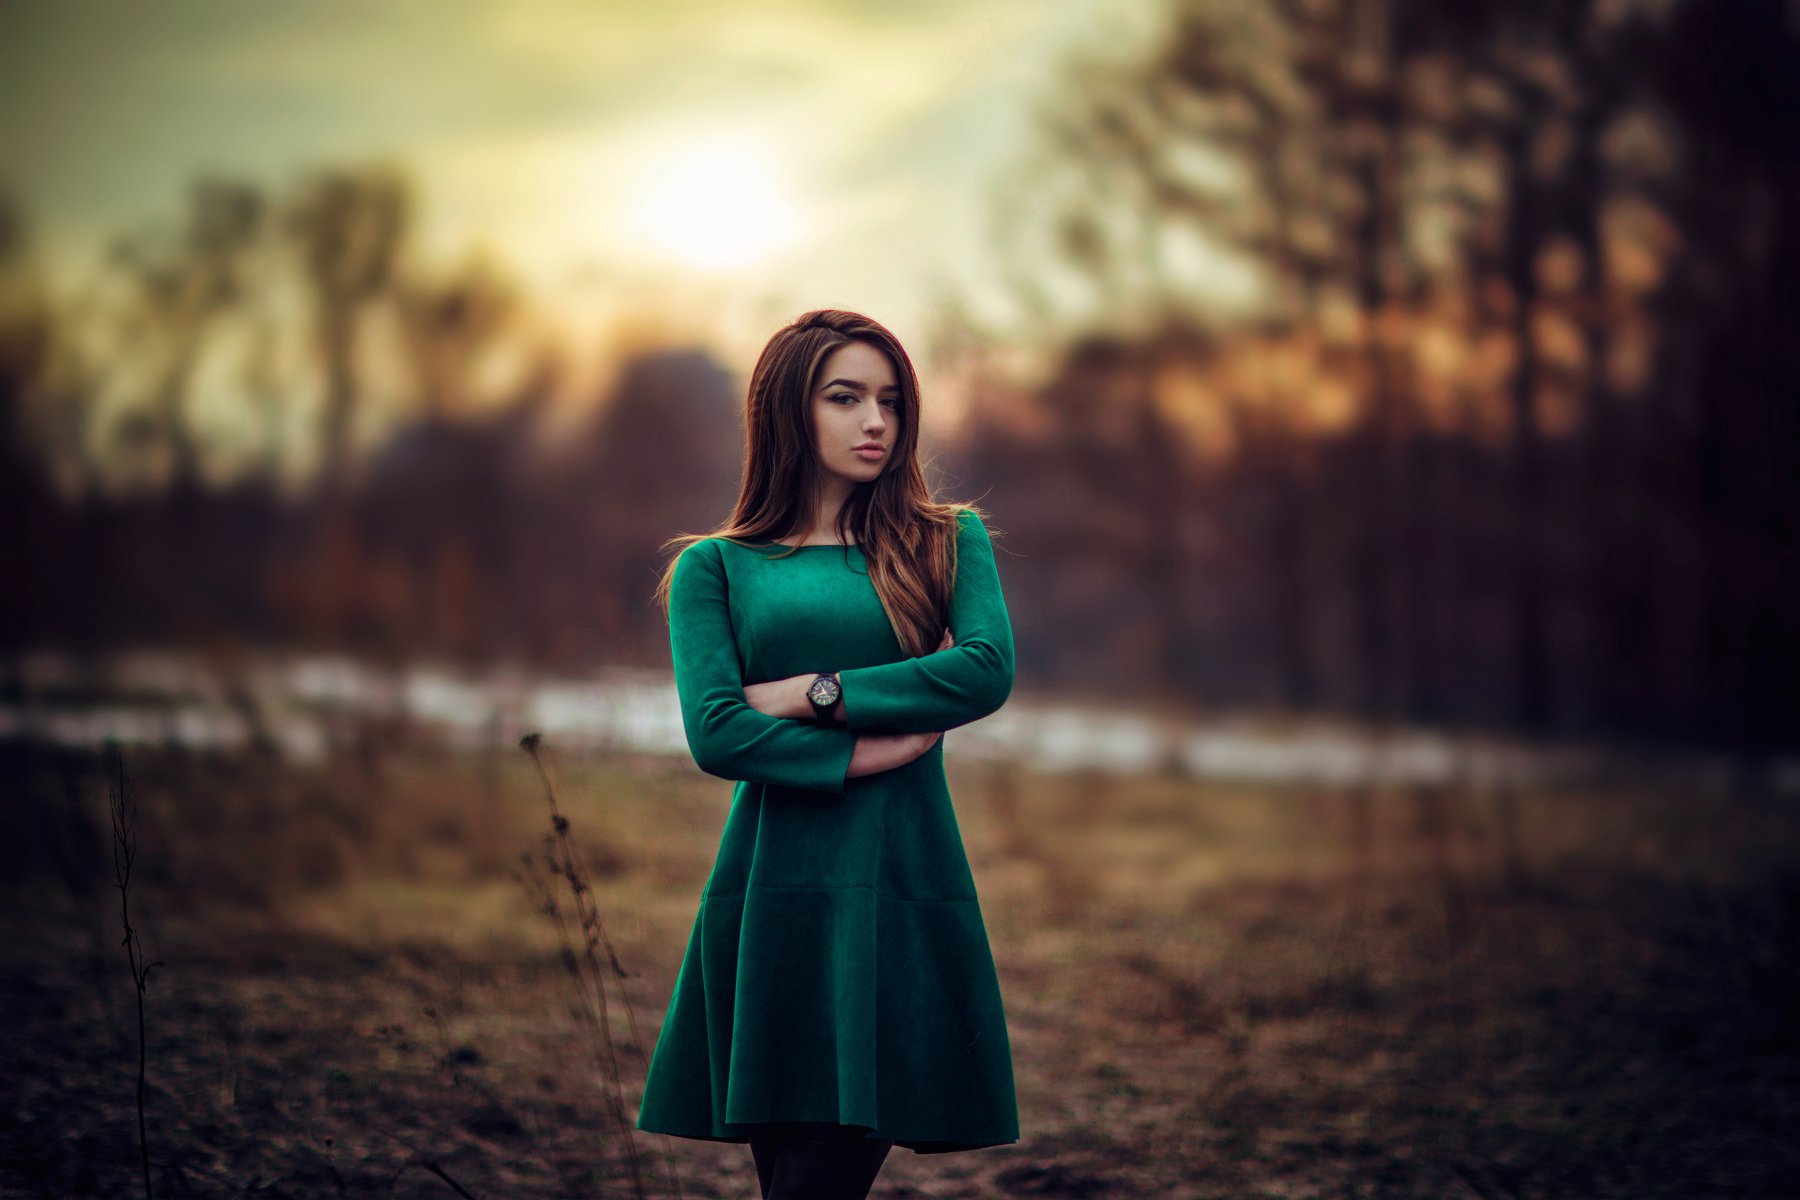 #portrait #beautiful #model #russia #moscow #winter #canon #sigma #sun #natural #light, Hakan Erenler